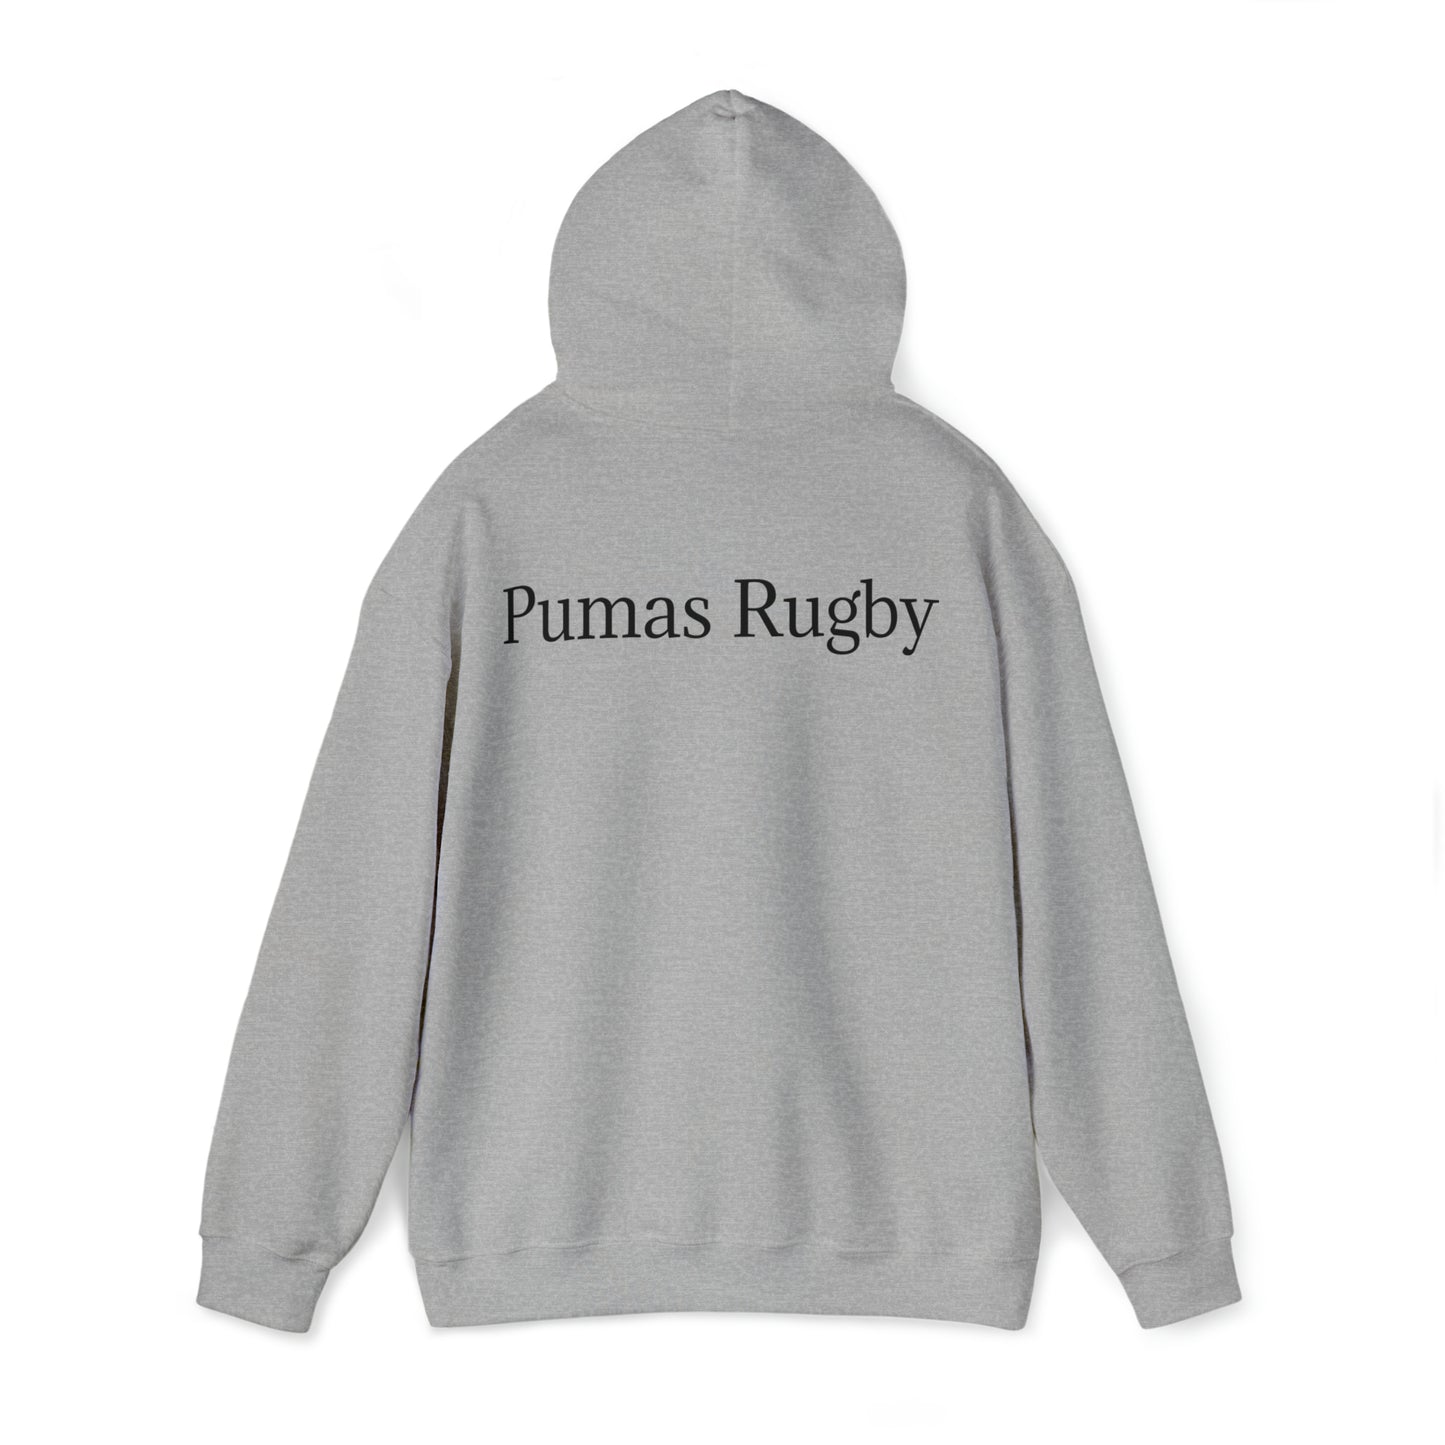 Happy Pumas - light hoodies